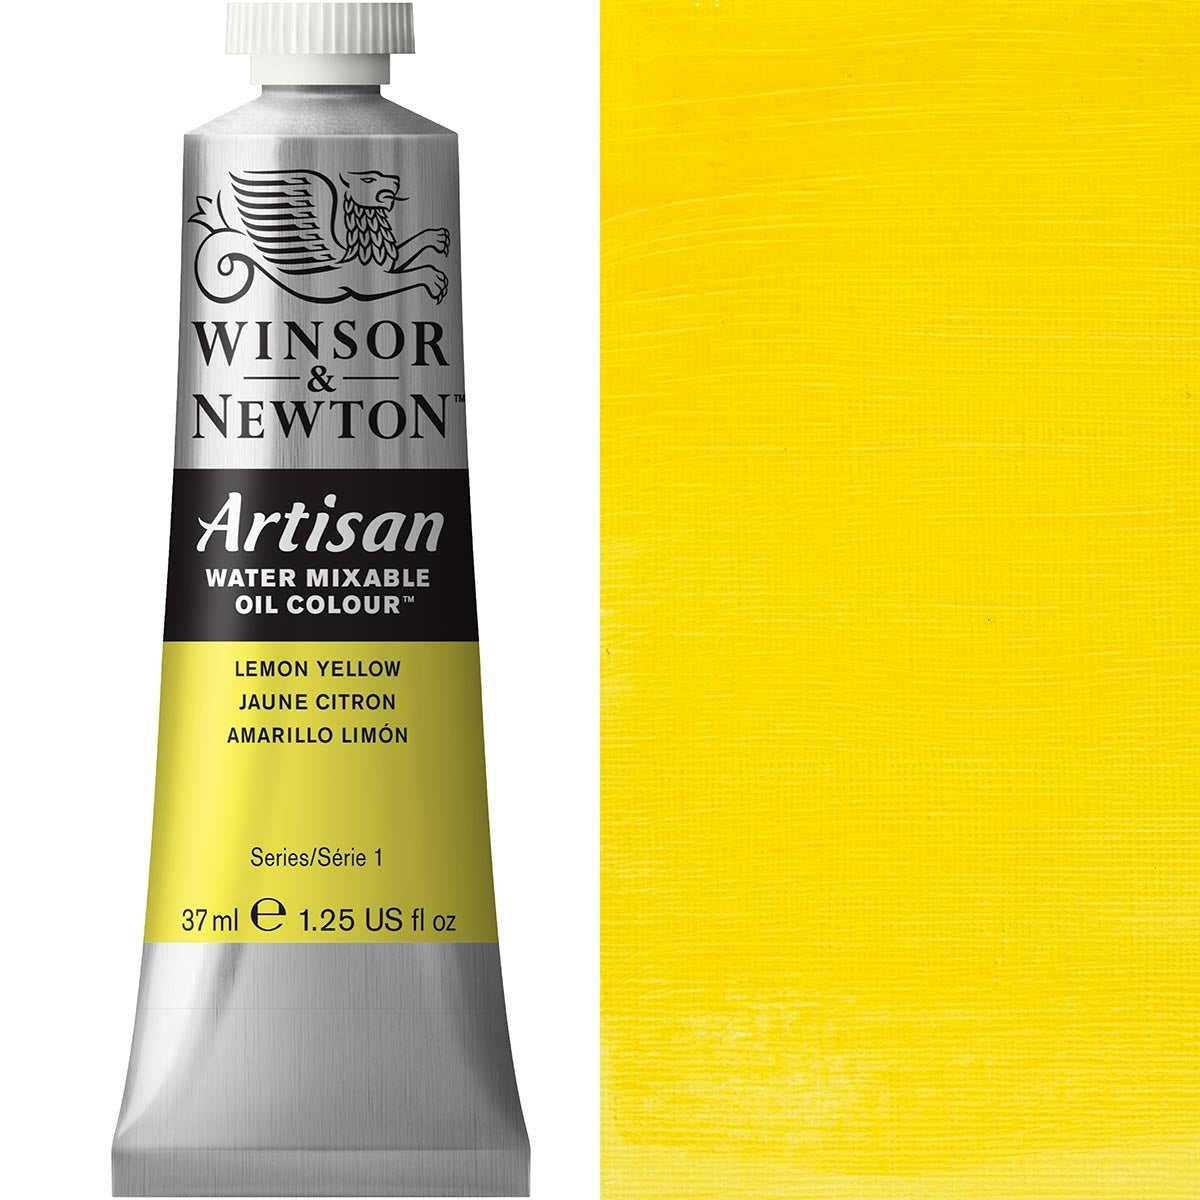 Winsor and Newton - Artisan Oil Colour Watermixable - 37ml - Lemon Yellow